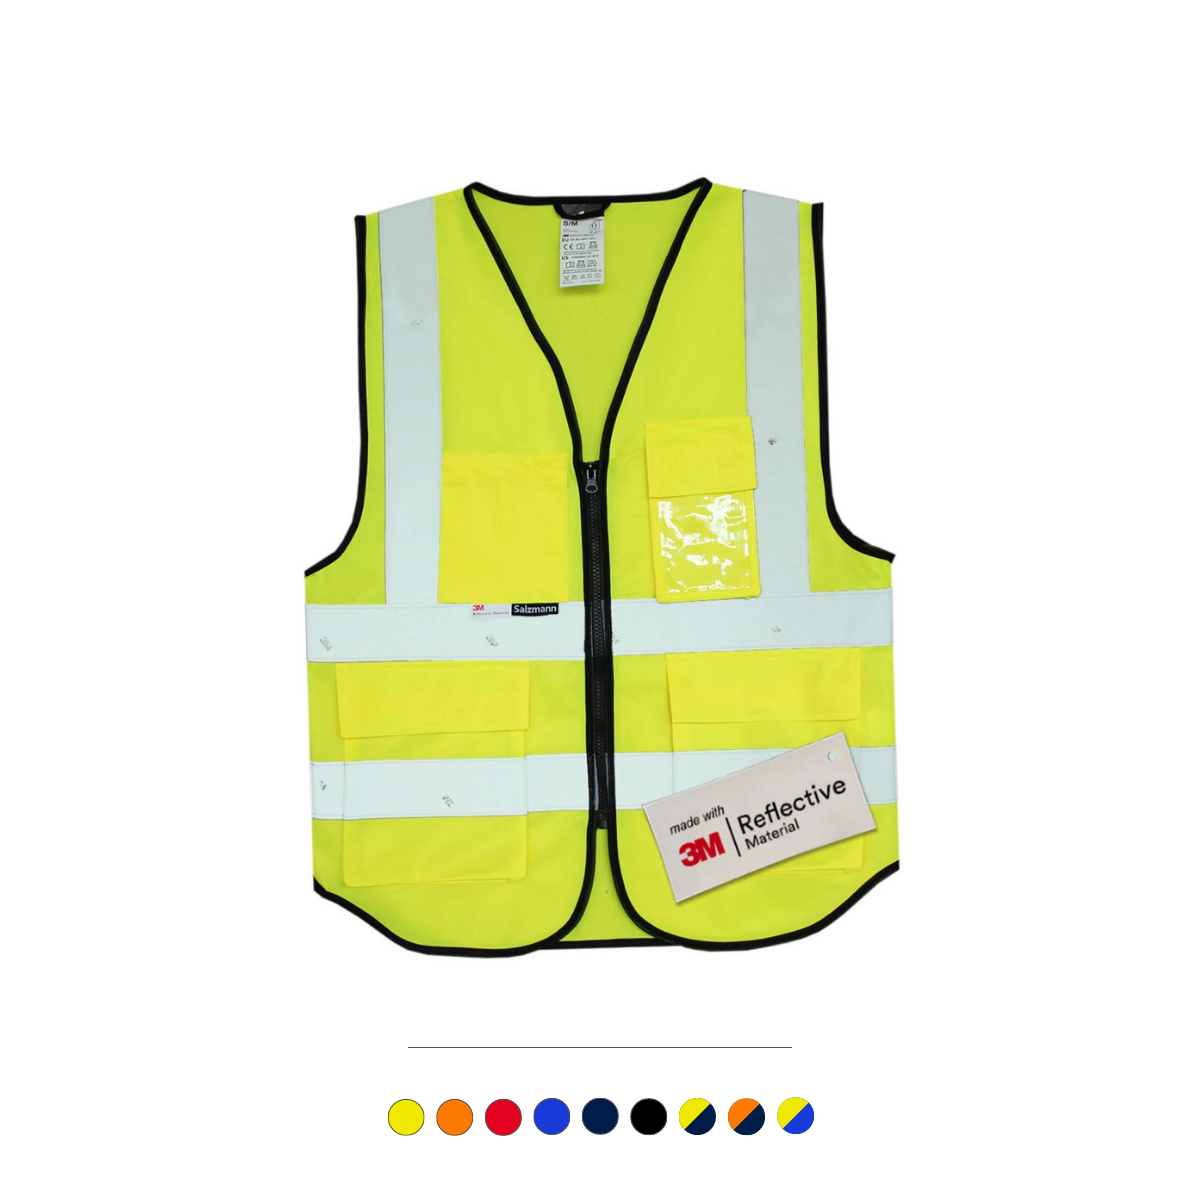 Salzmann 3M Safety Vest – Salzmann DE/EU